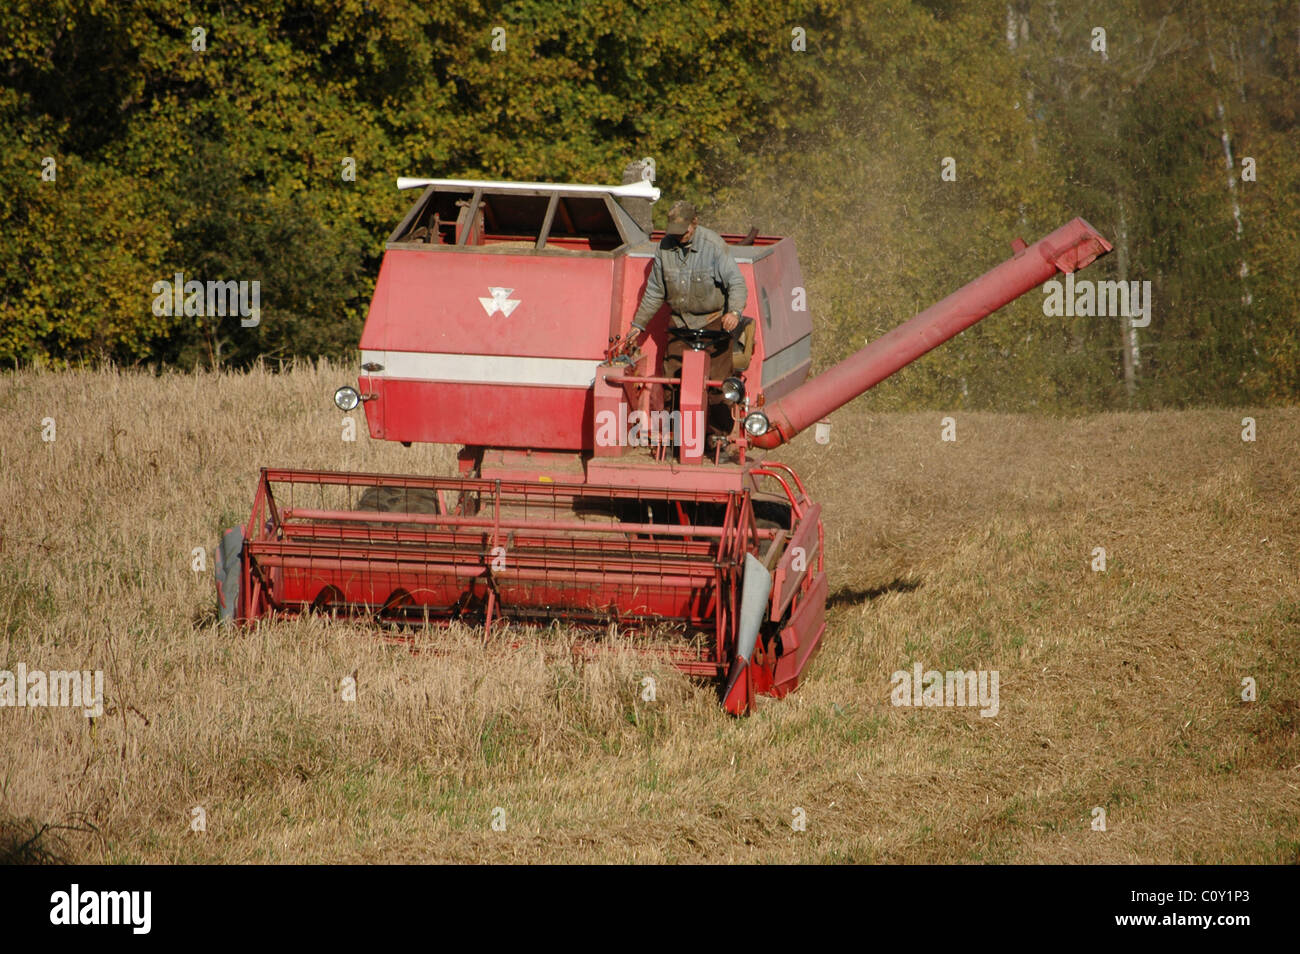 Red grain harvester combine in a field Stock Photo